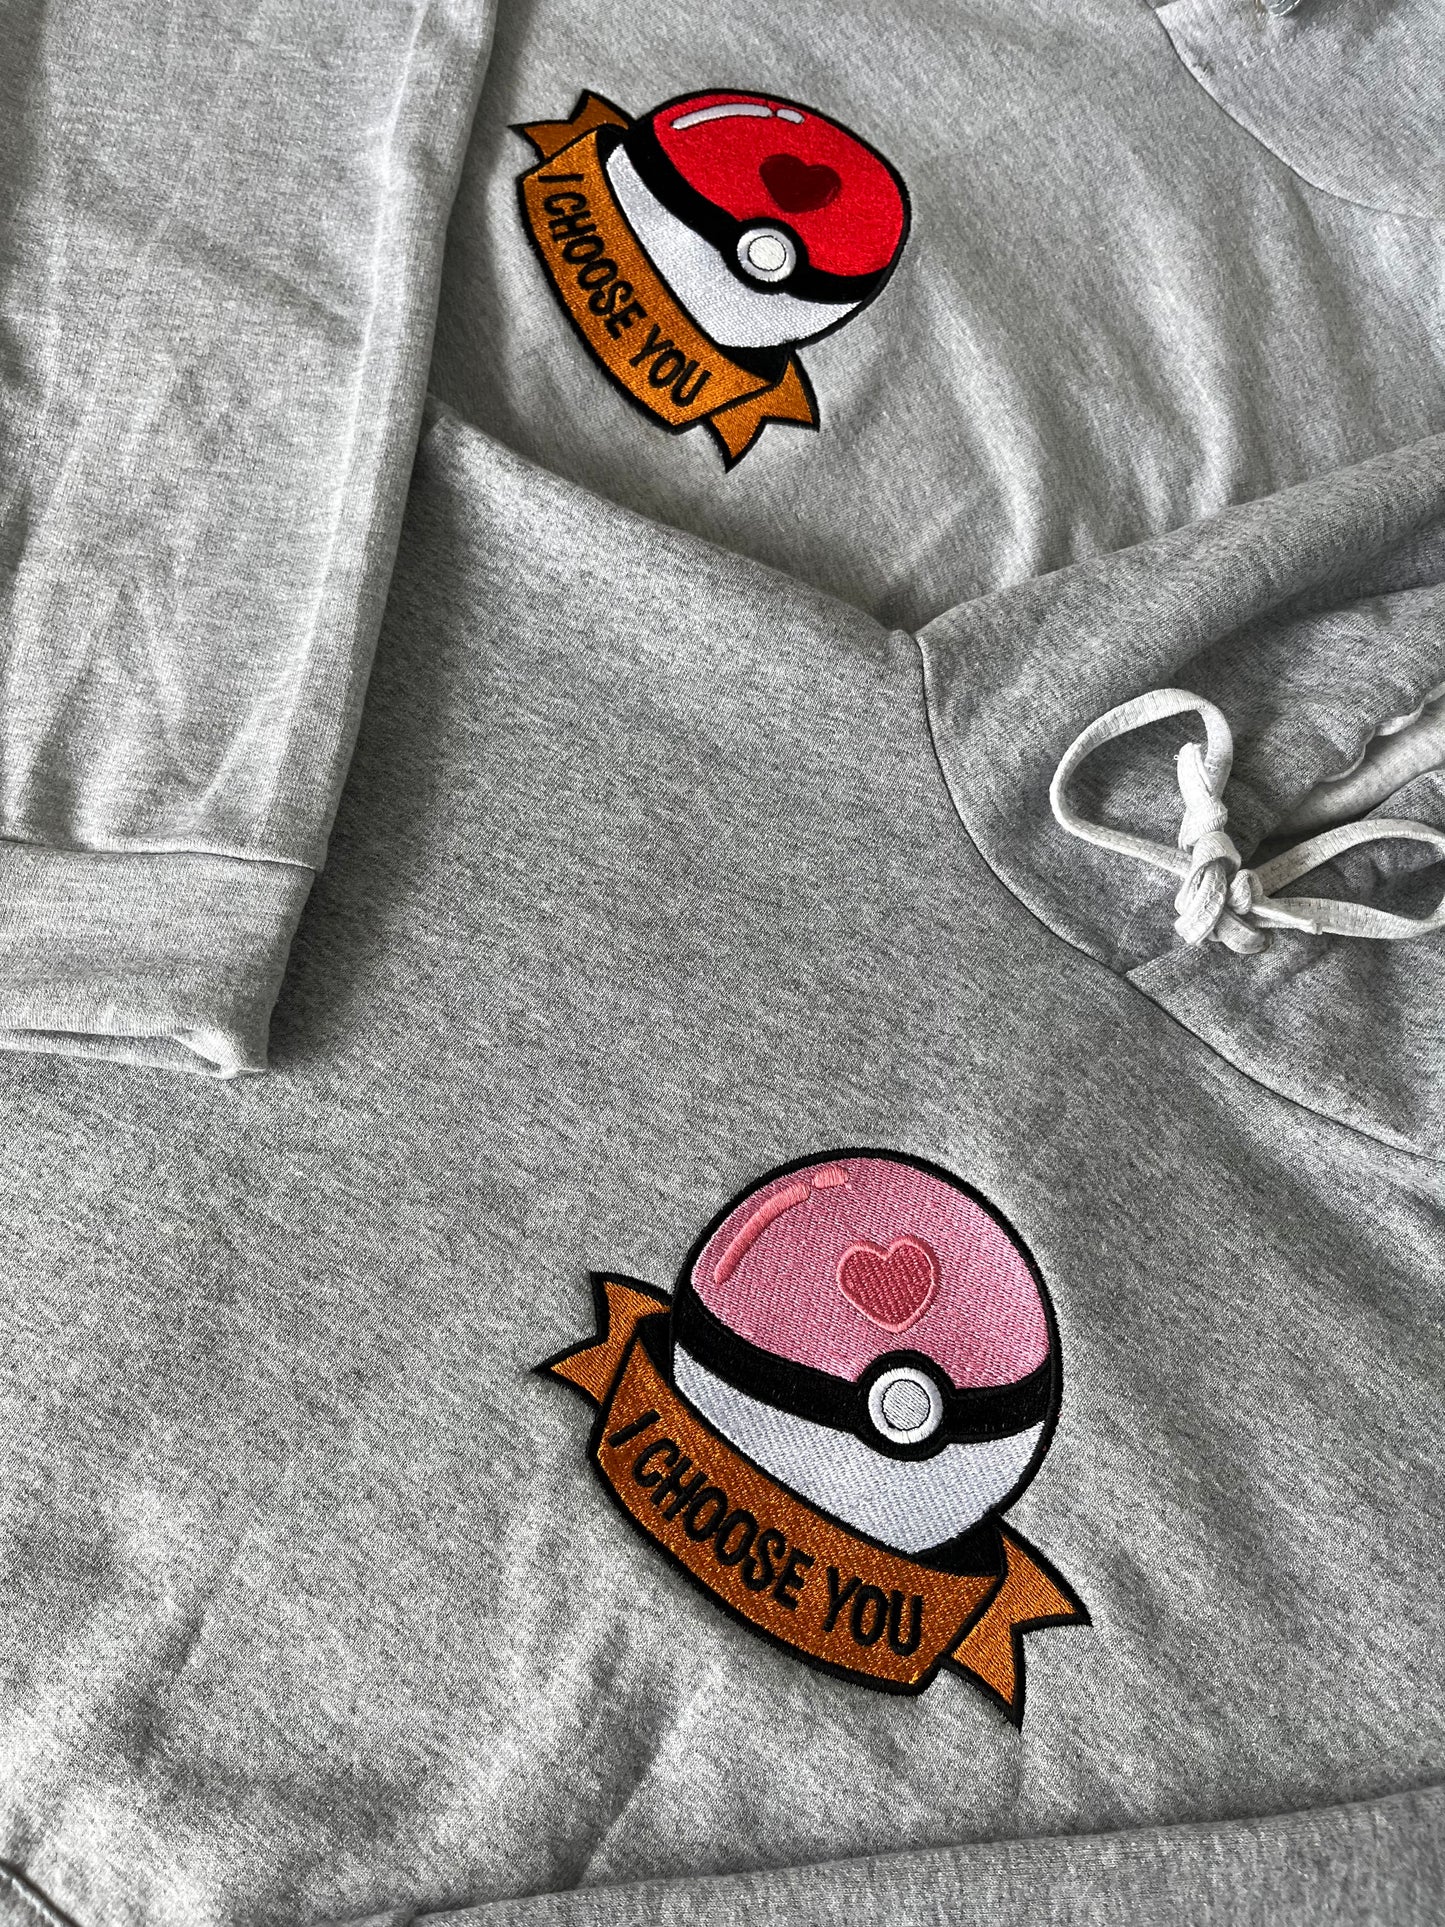 Couple Pokeballs Embroidery (Pokemon)